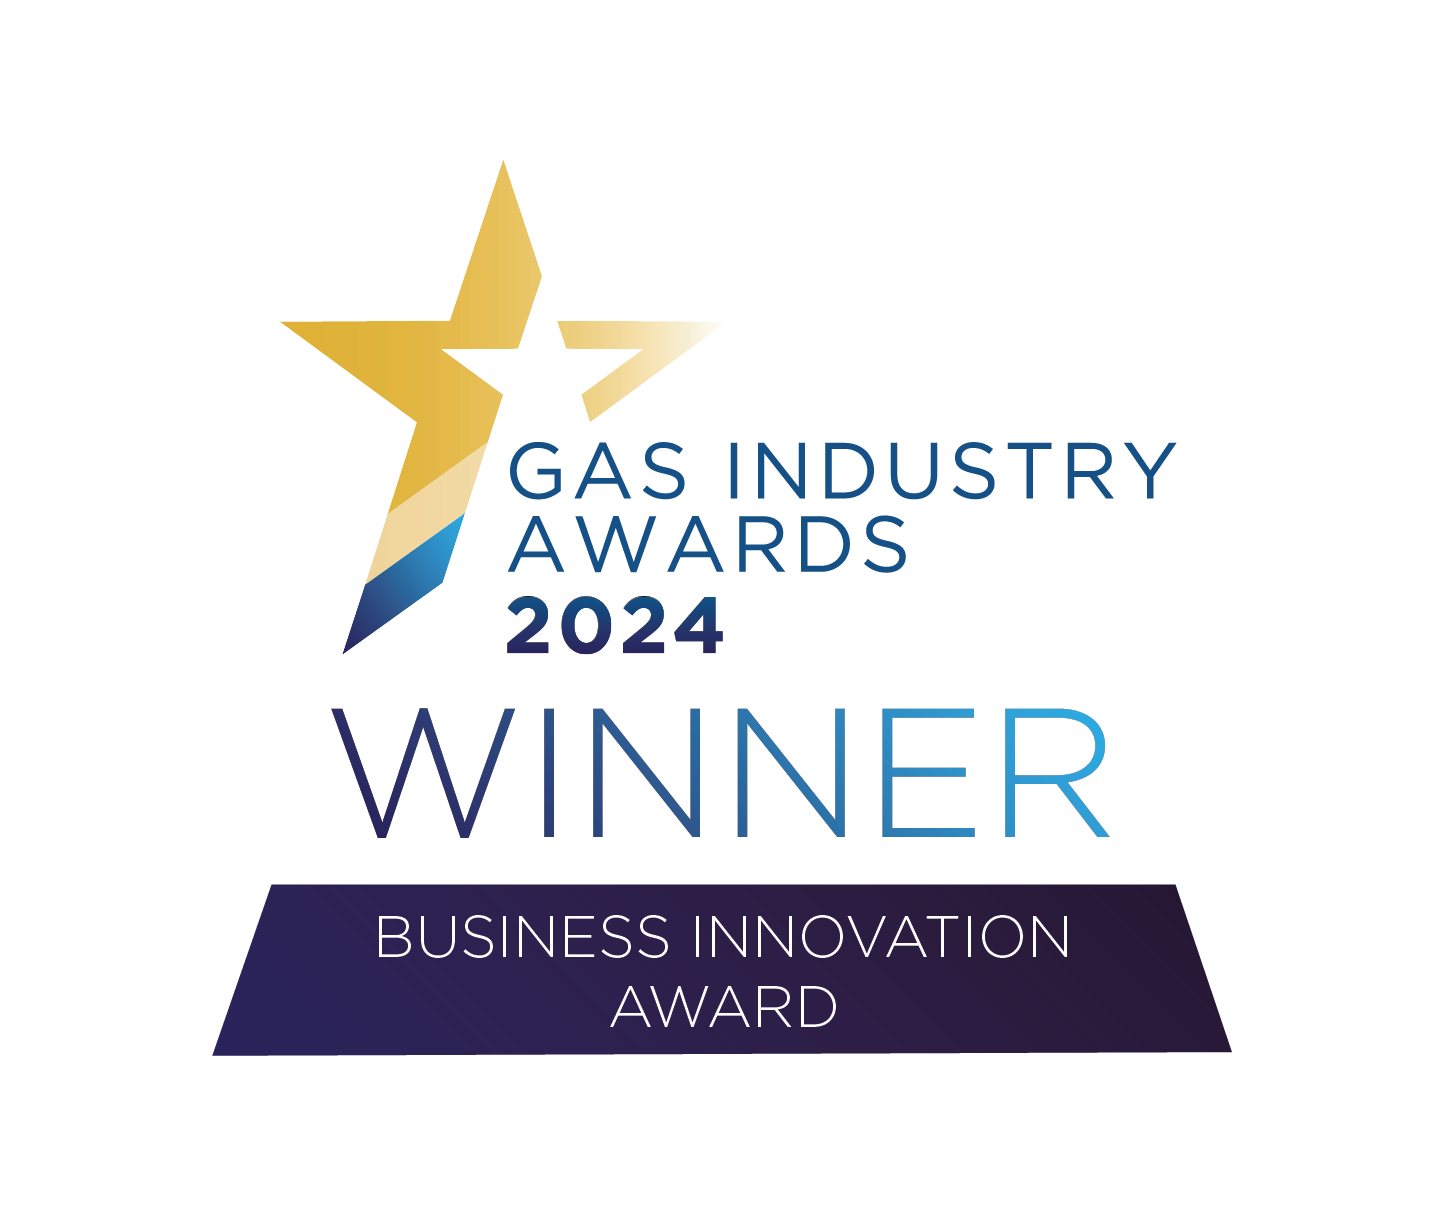 Gas Industry Awards - Business Innovation Award